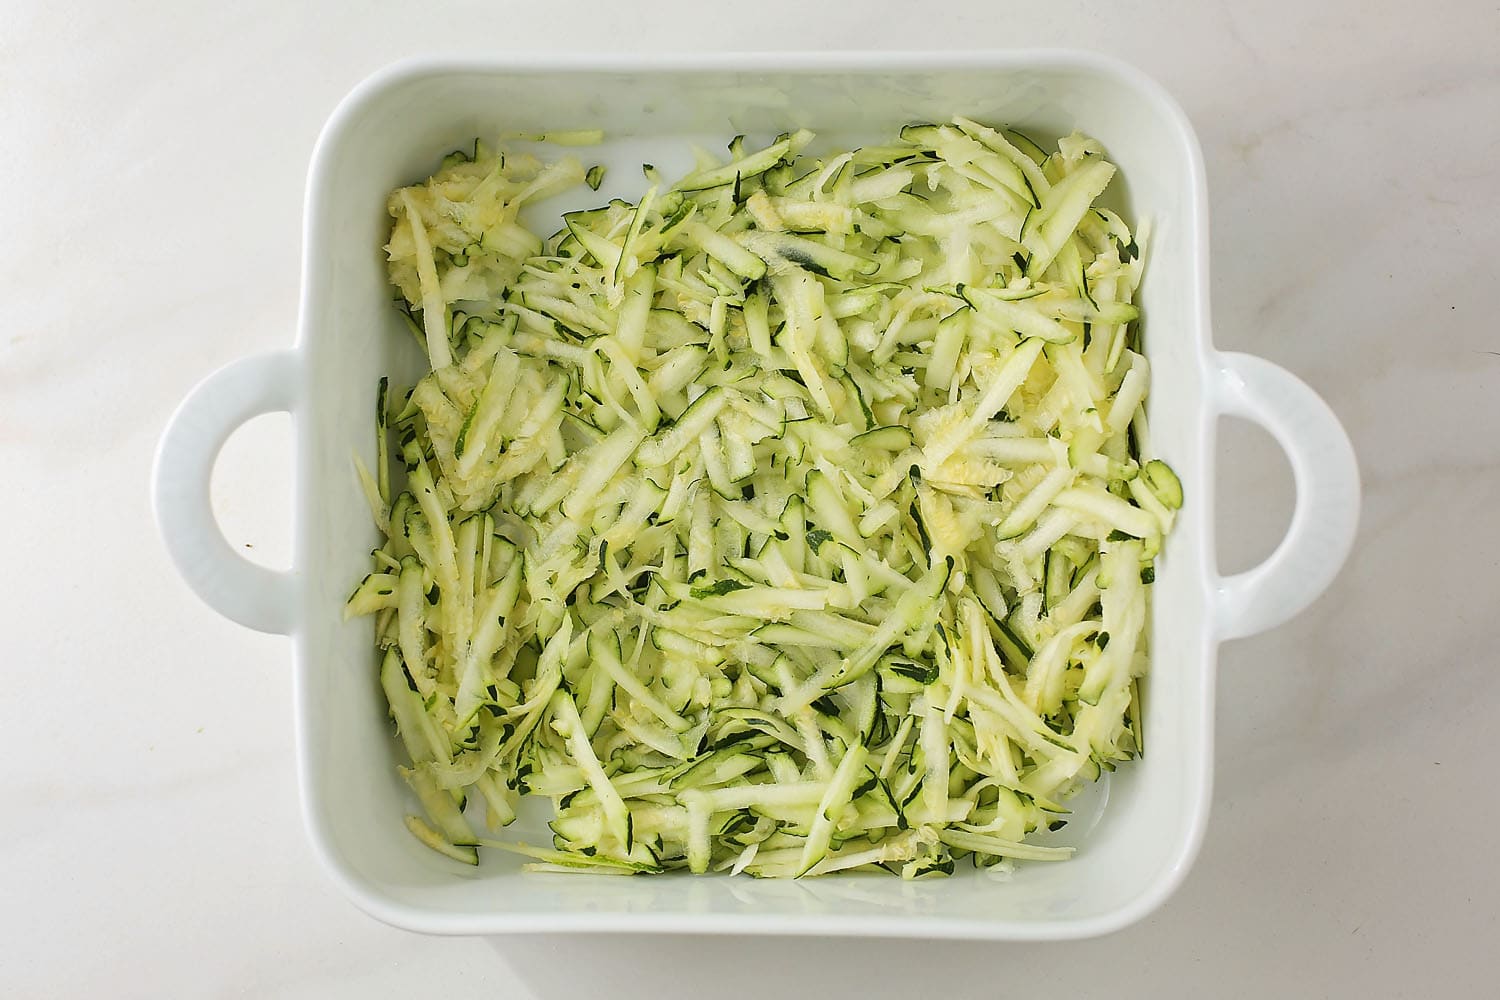 shredded zucchini in the white square dish